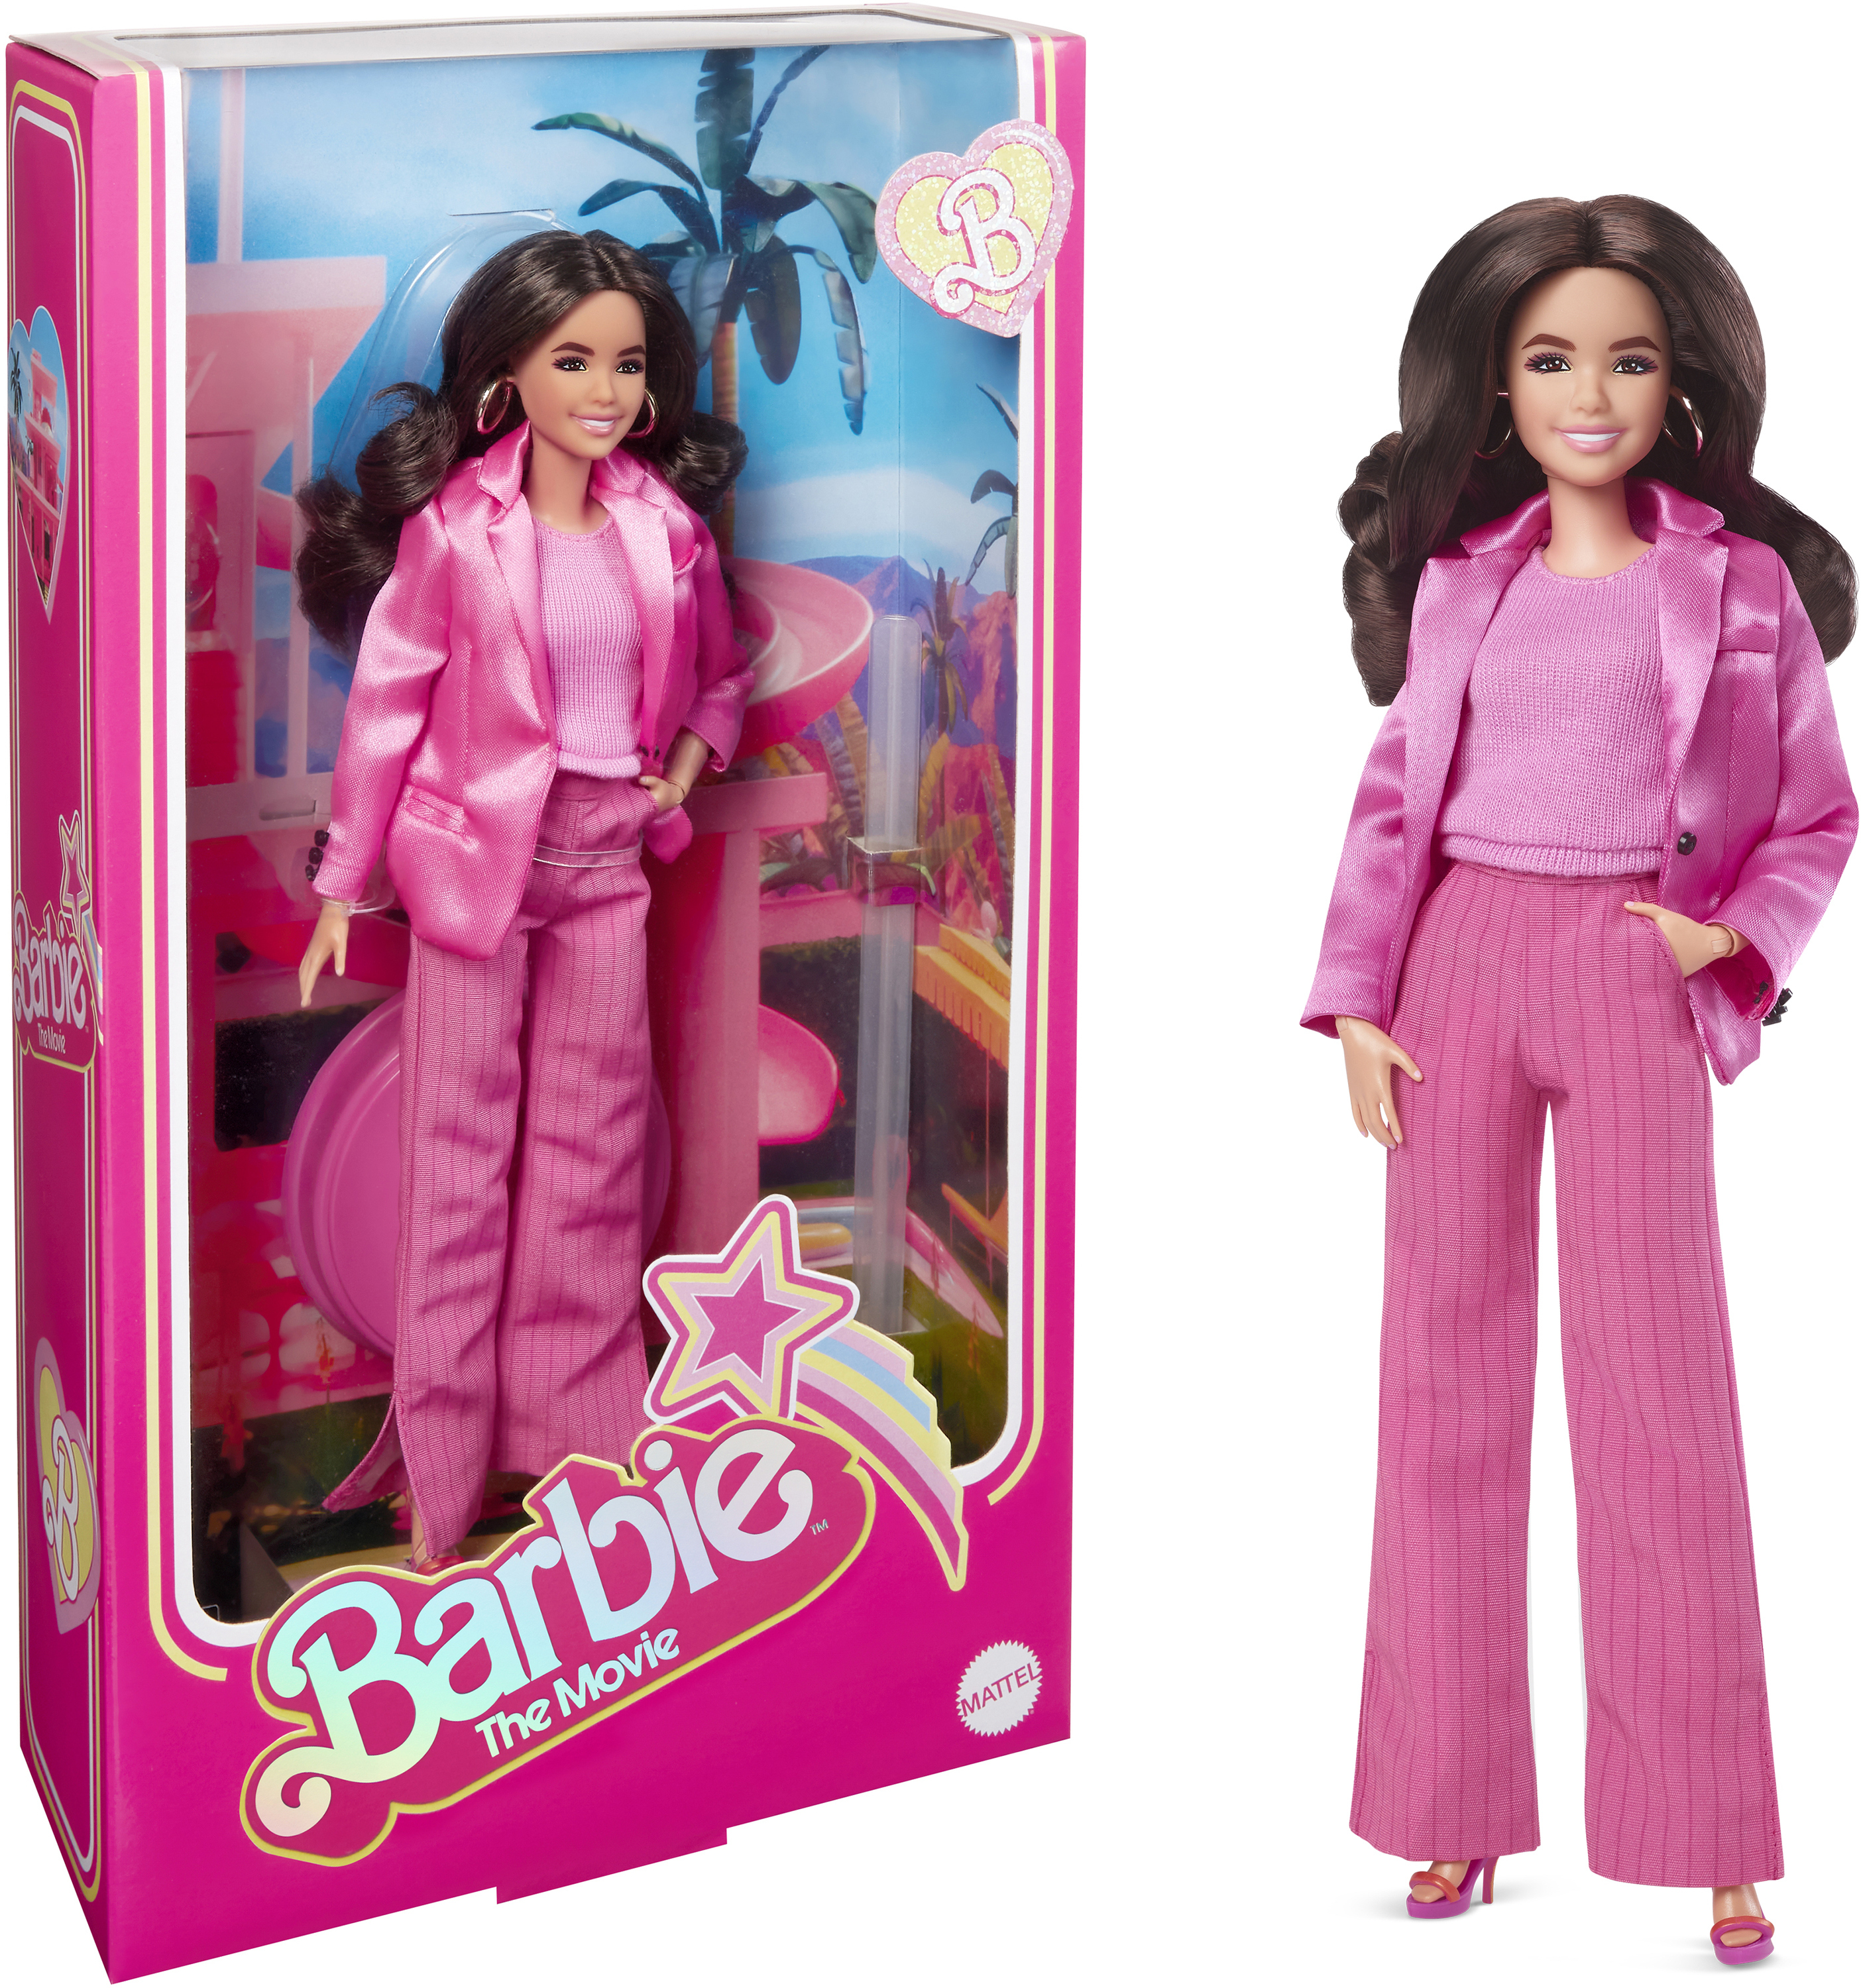 Barbie Barbie Pop